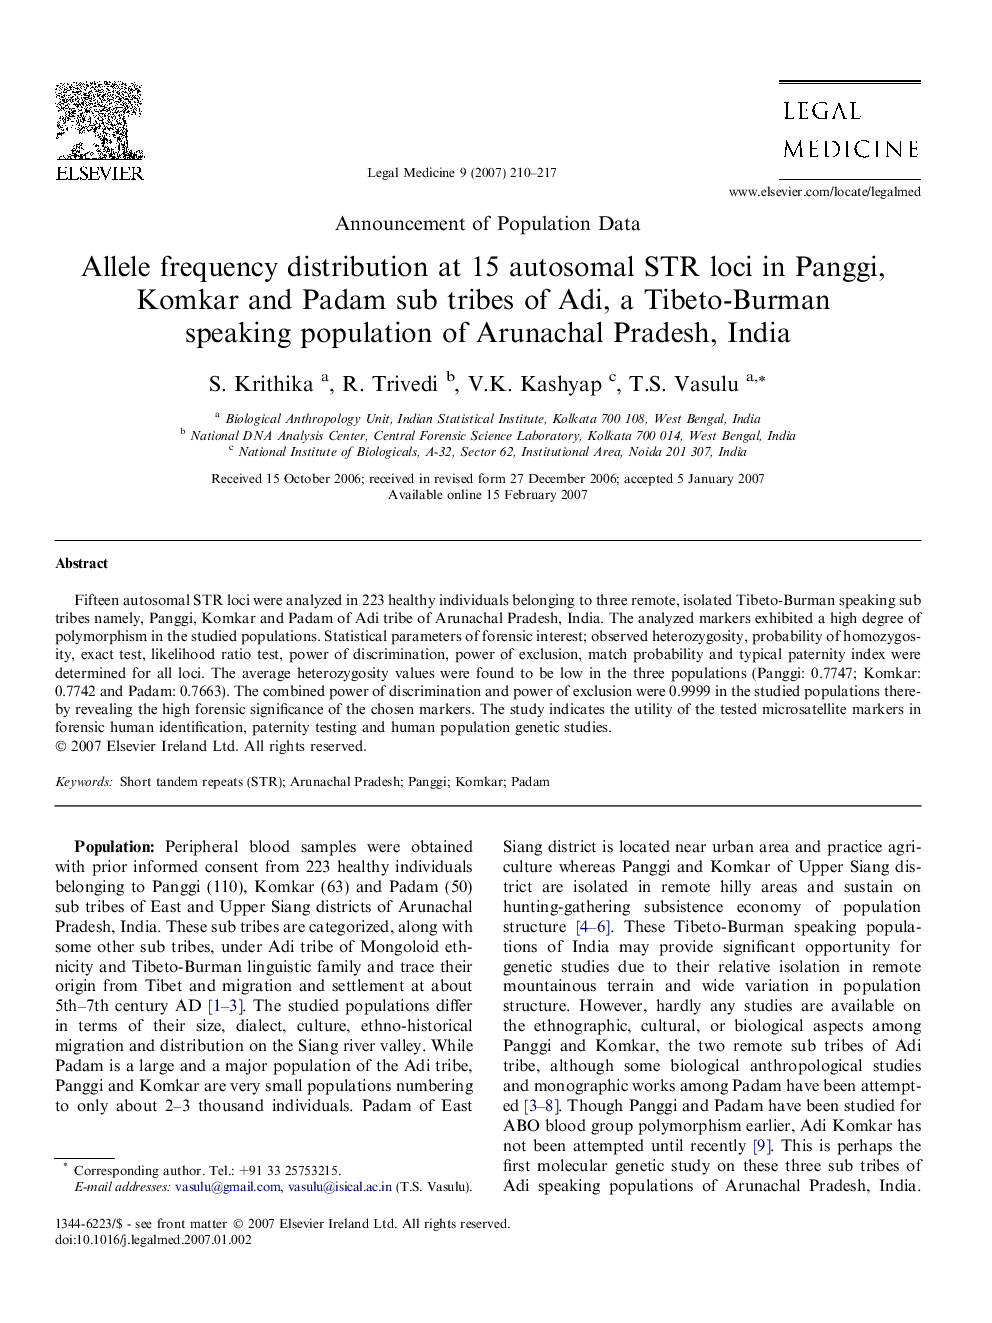 Allele frequency distribution at 15 autosomal STR loci in Panggi, Komkar and Padam sub tribes of Adi, a Tibeto-Burman speaking population of Arunachal Pradesh, India